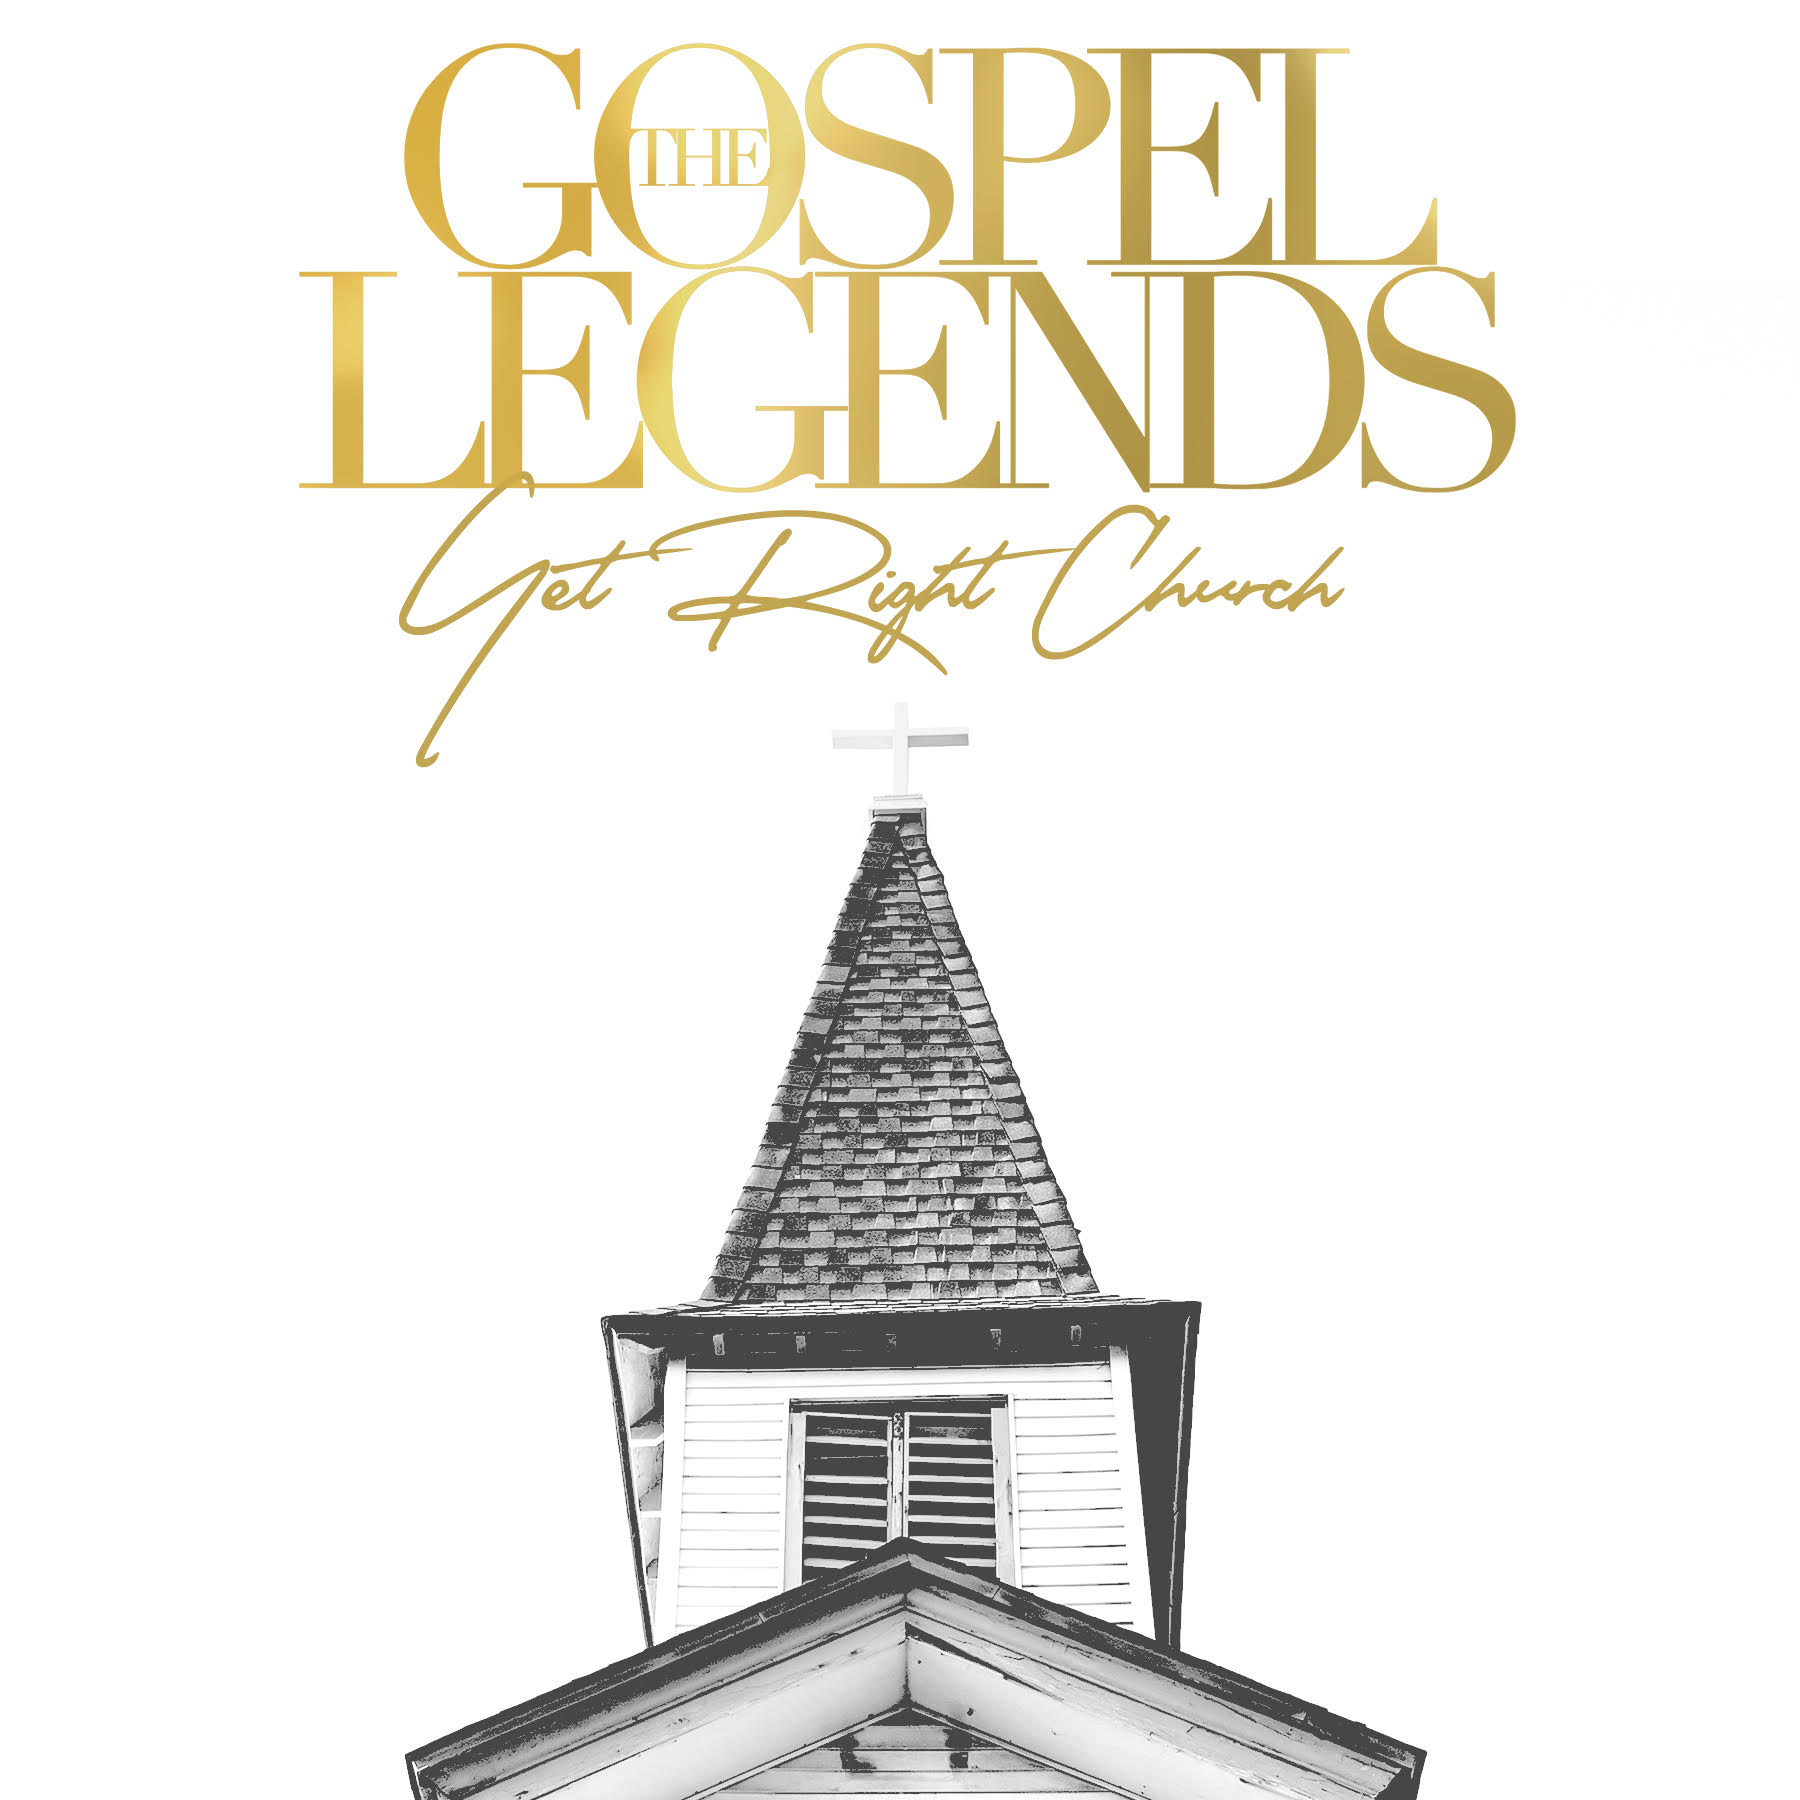 The Gospel Legends - Get Right Church